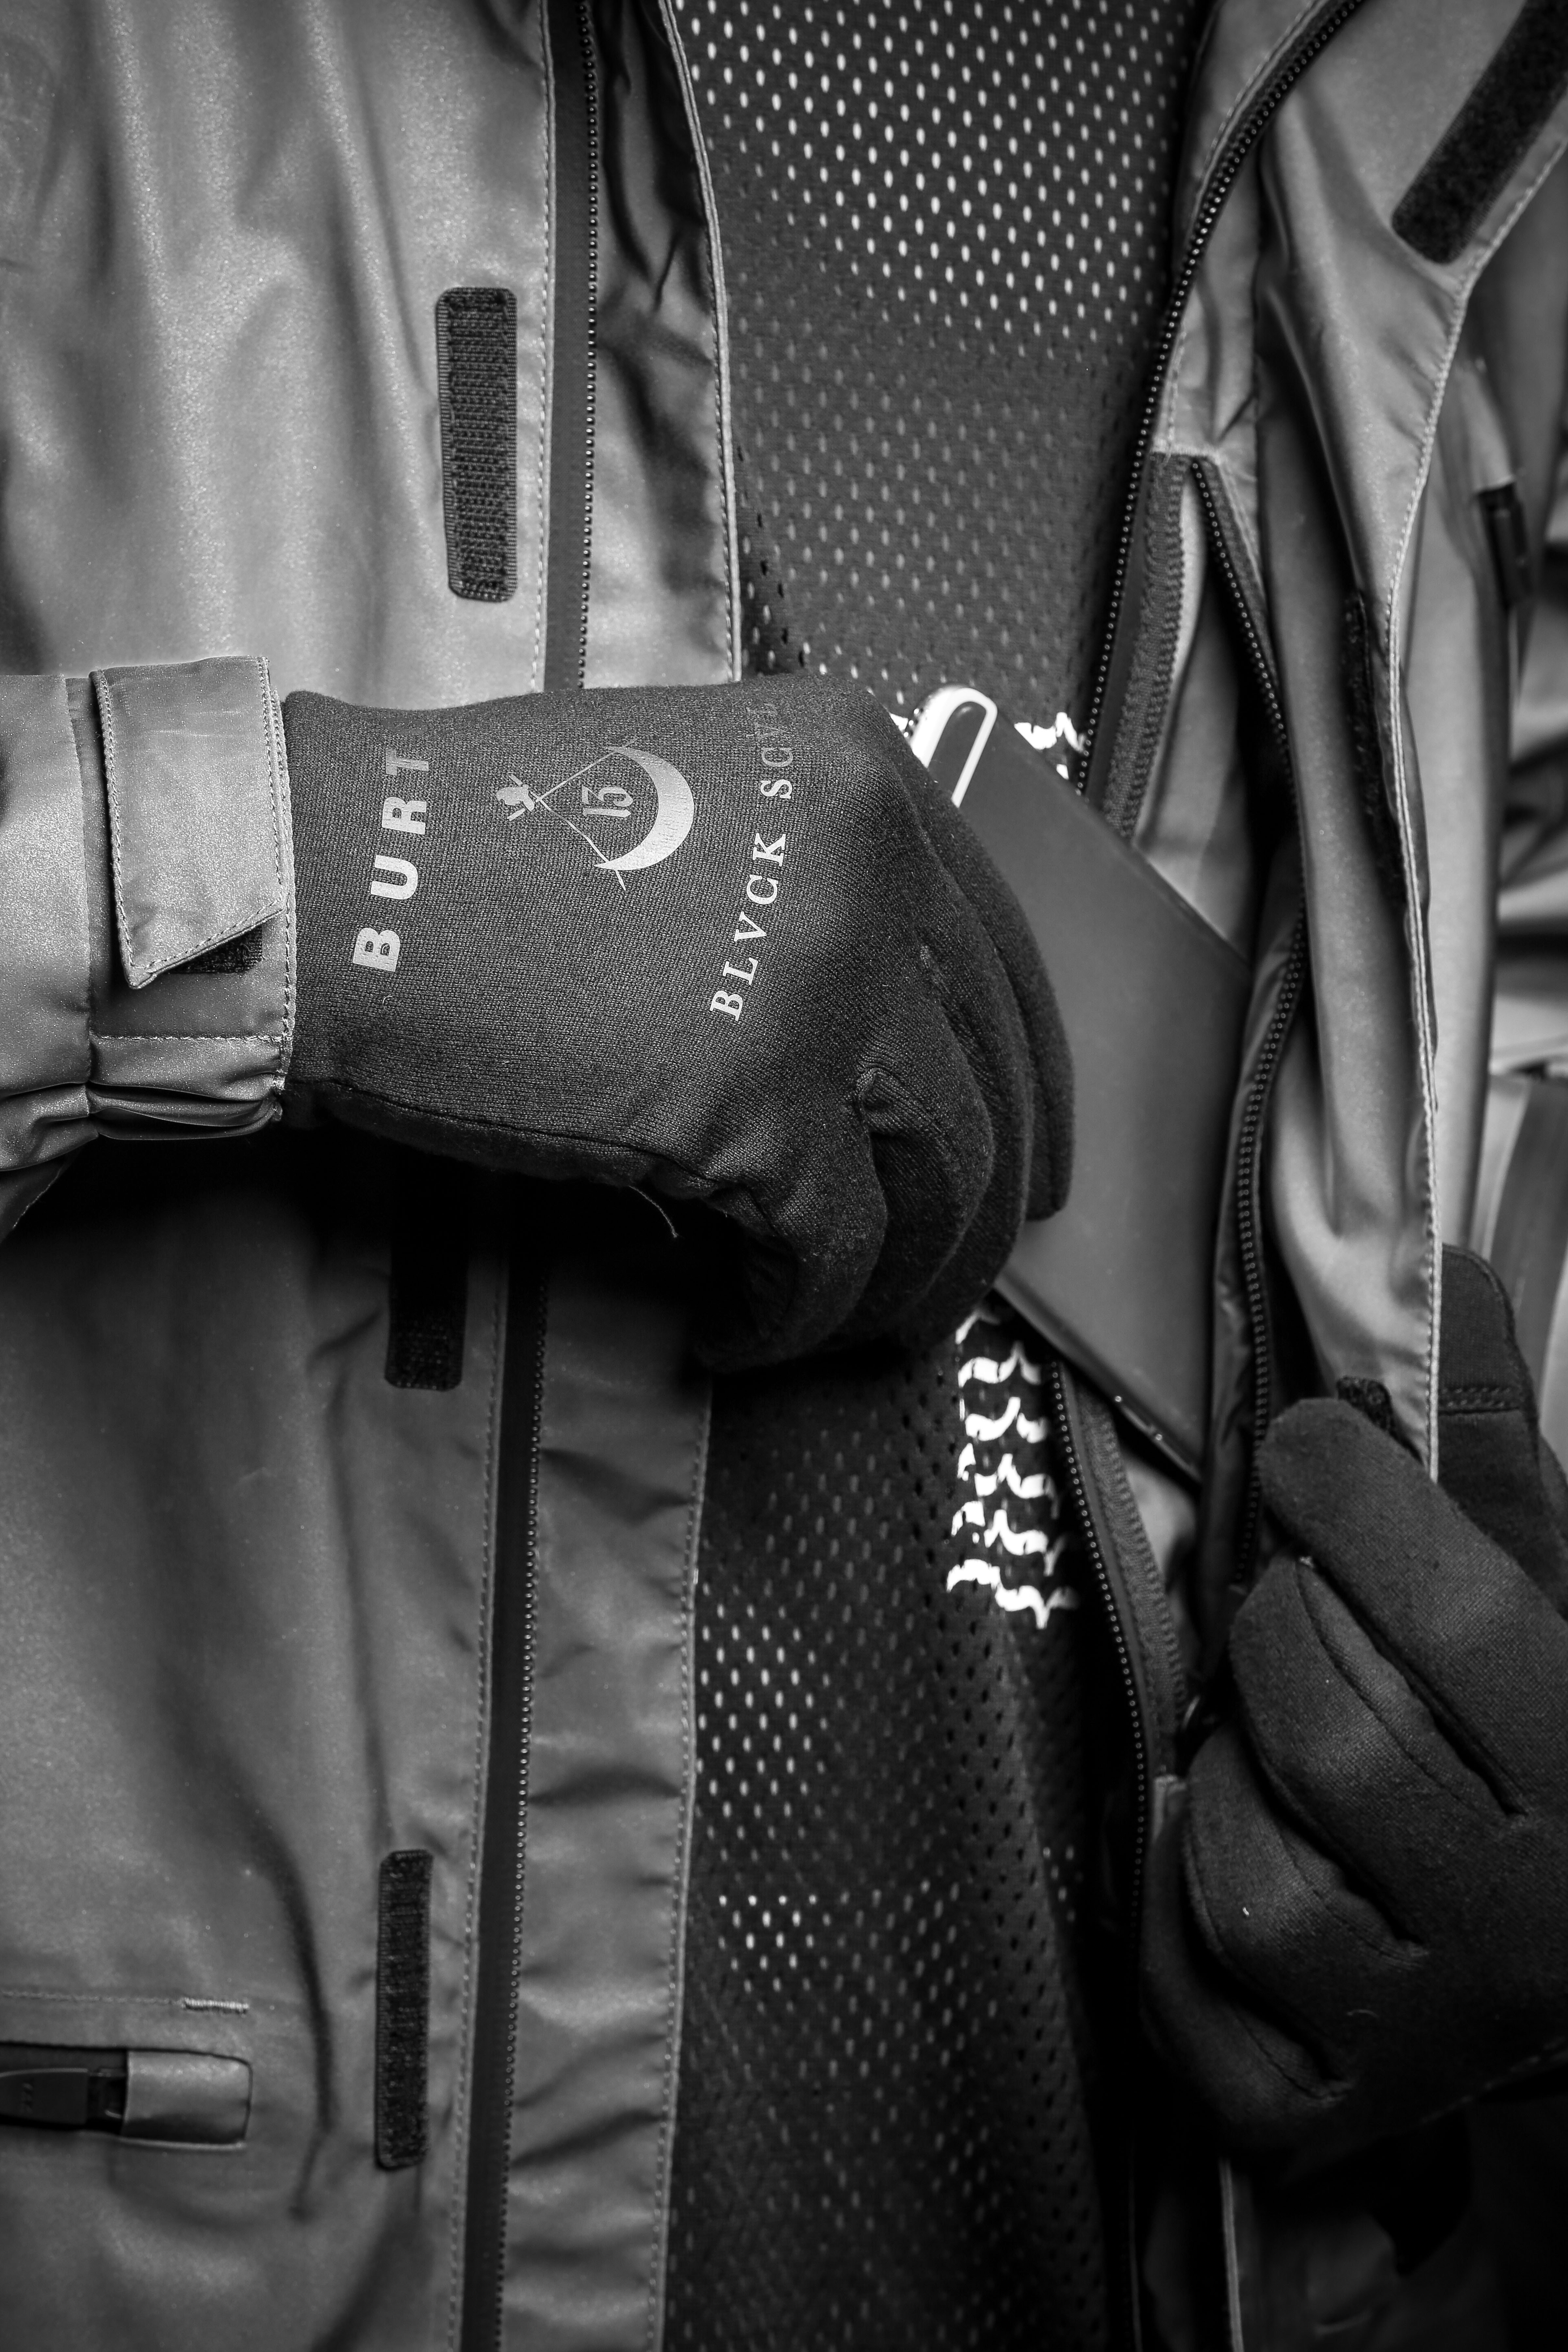 Burton x Black Scale 2016 Winter Collection Pants Jackets snowboarding Lookbooks hard wear accessories